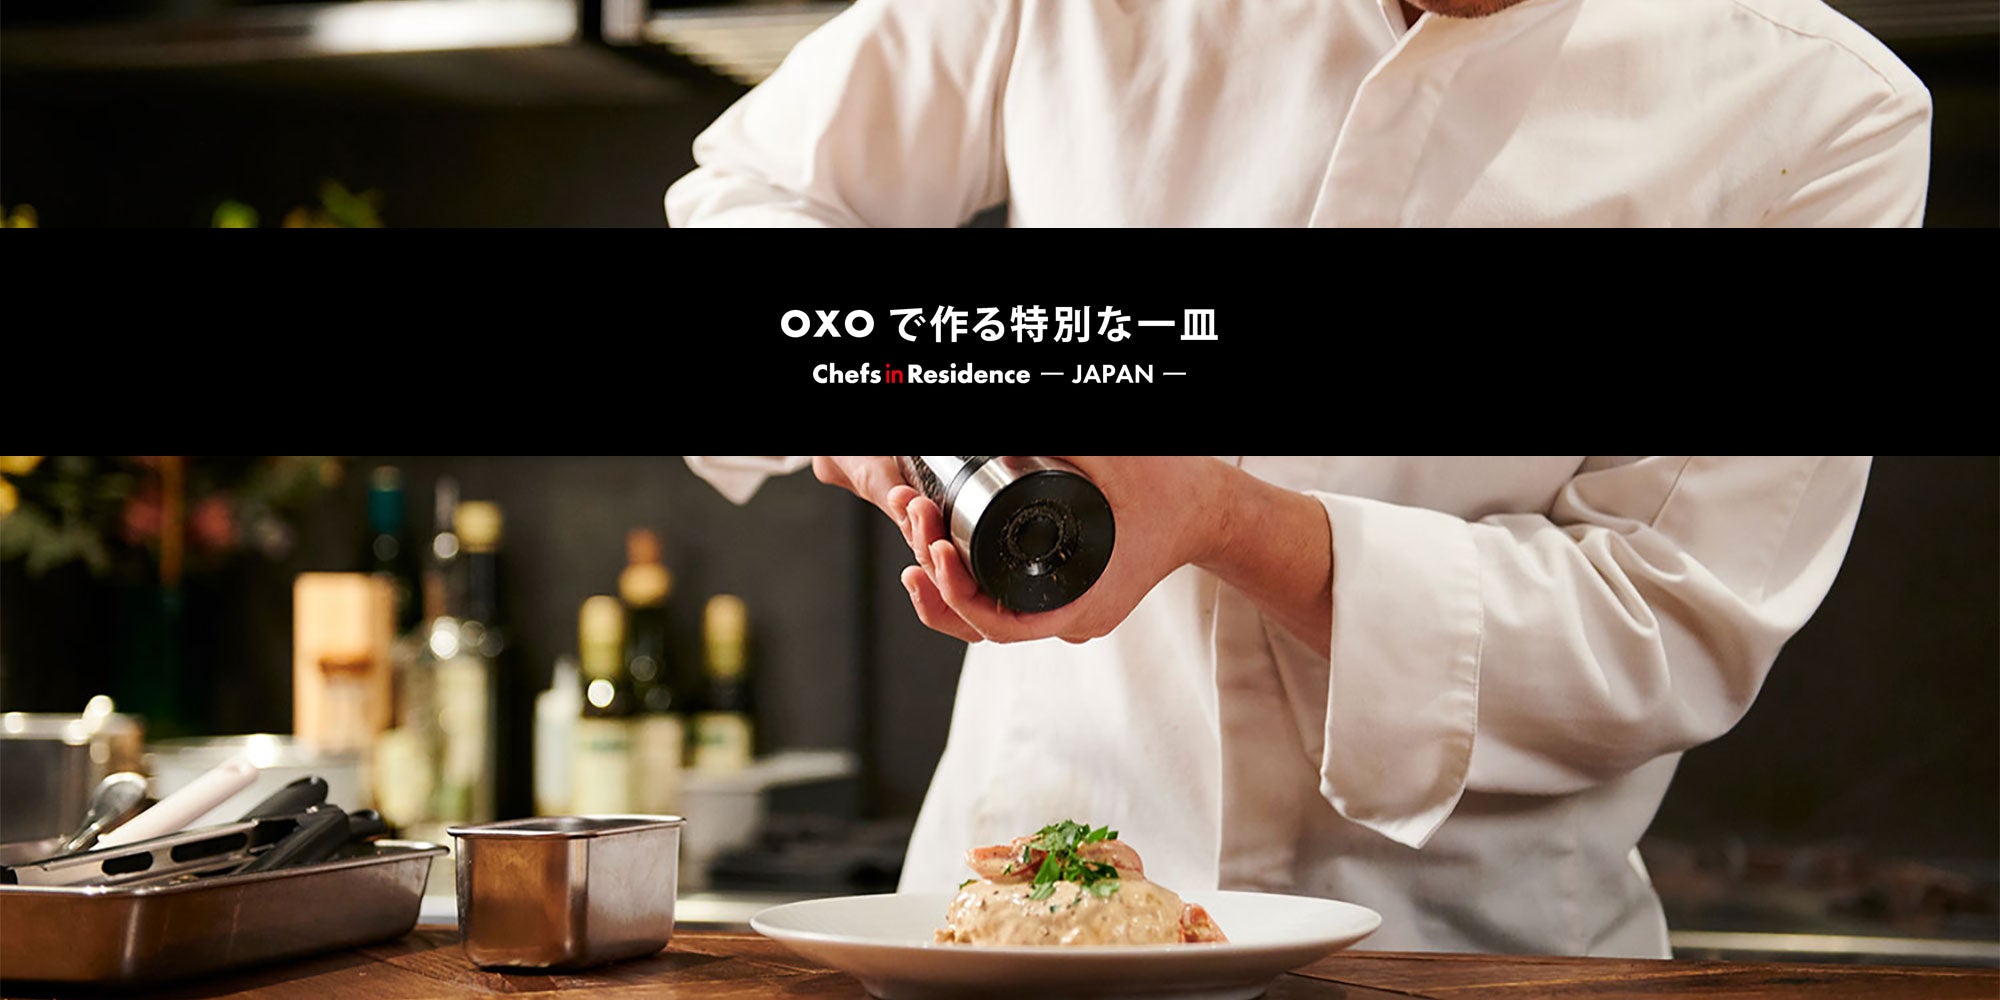 OXOで作る特別な一皿<br>-Chefs in Residence-<br>米澤文雄シェフのドライトマト入りイタリアンハンバーグ